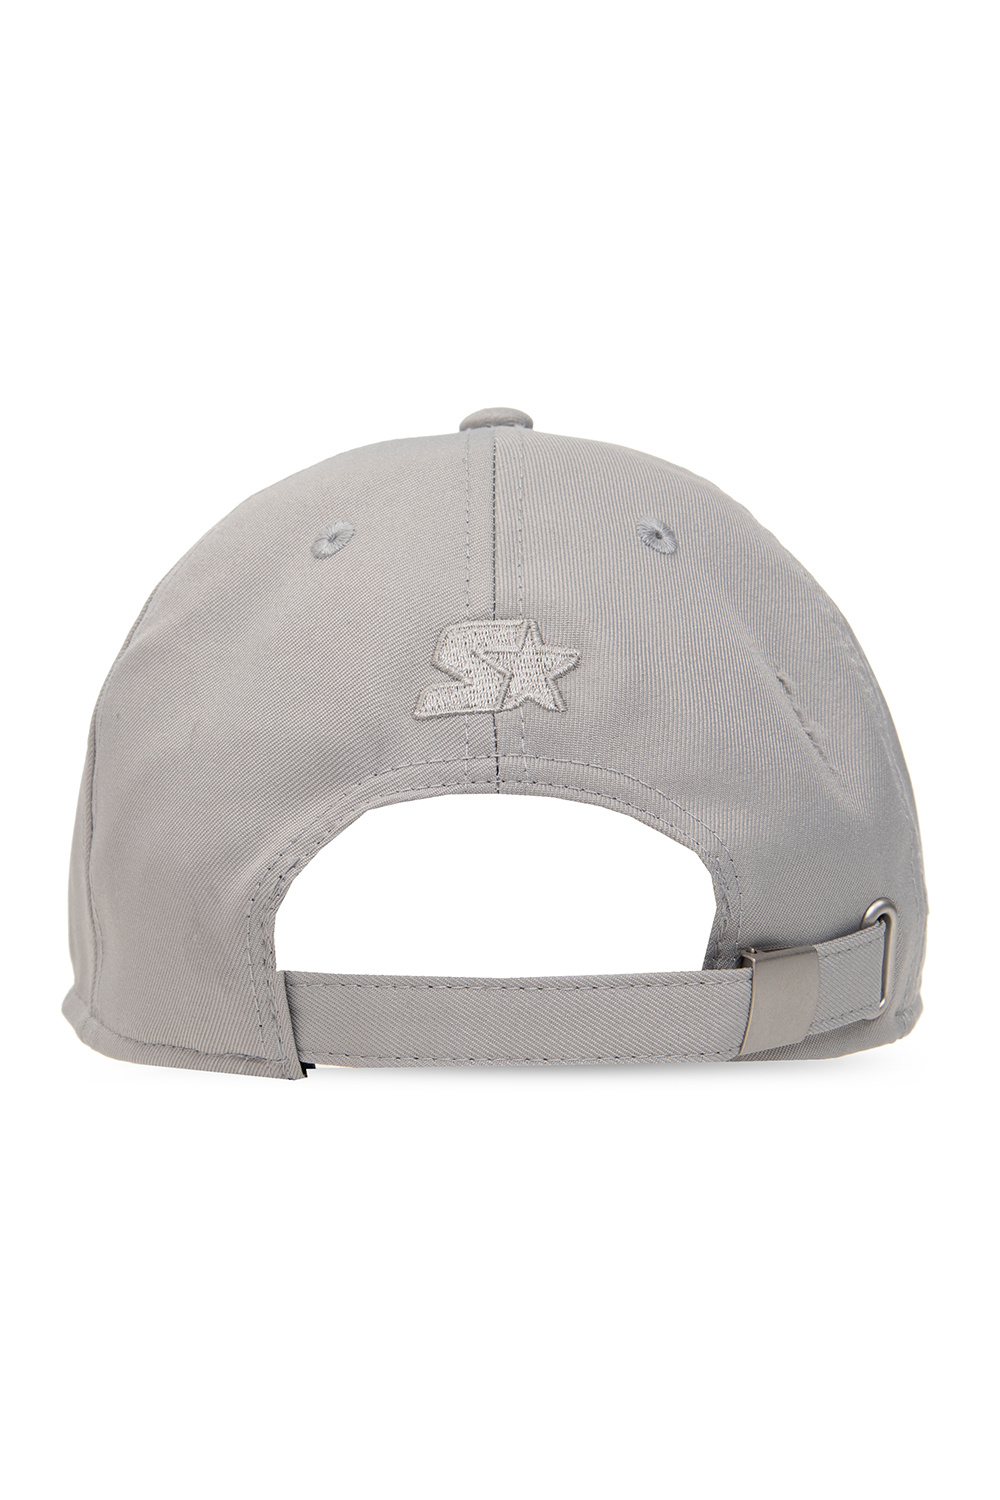 IetpShops Australia - merino wool contrast lining hat - Grey 